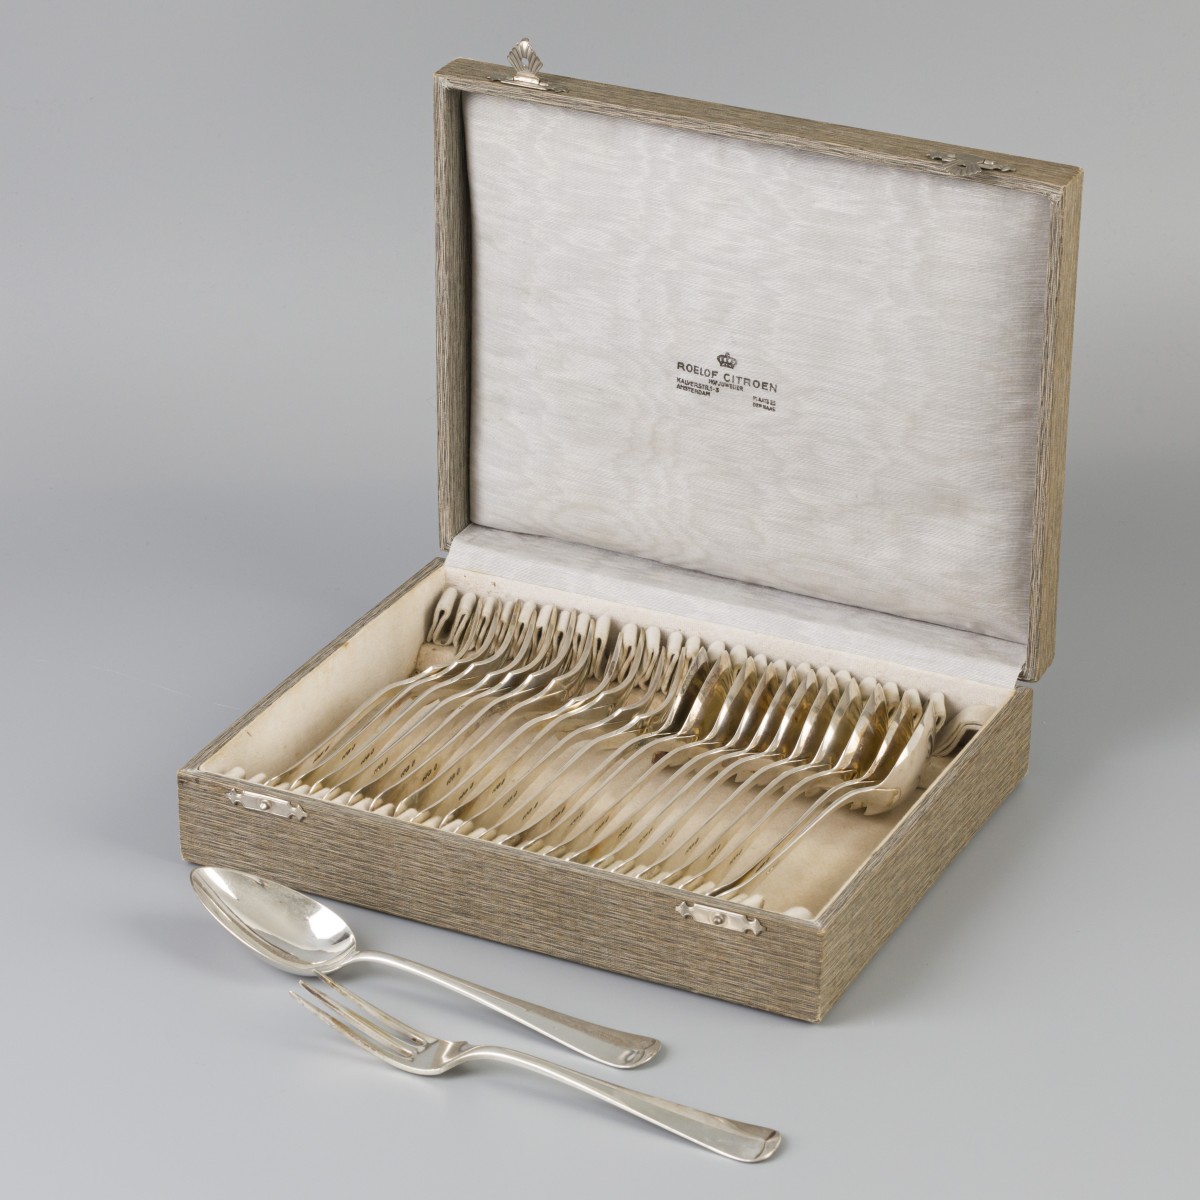 24-delige set lepels & vorken "Haags lofje" zilver.